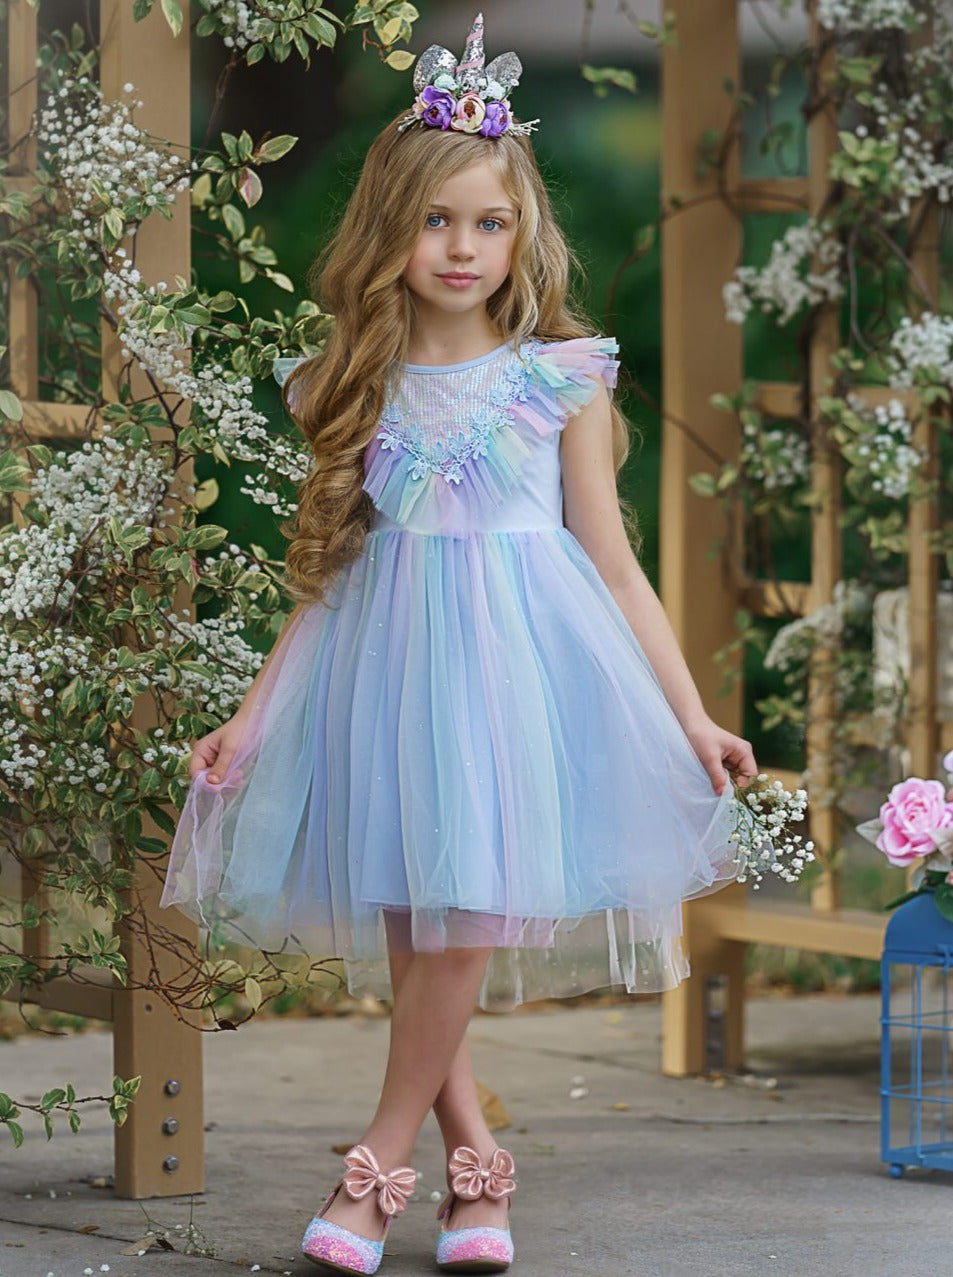 Beautiful princess dress for girls